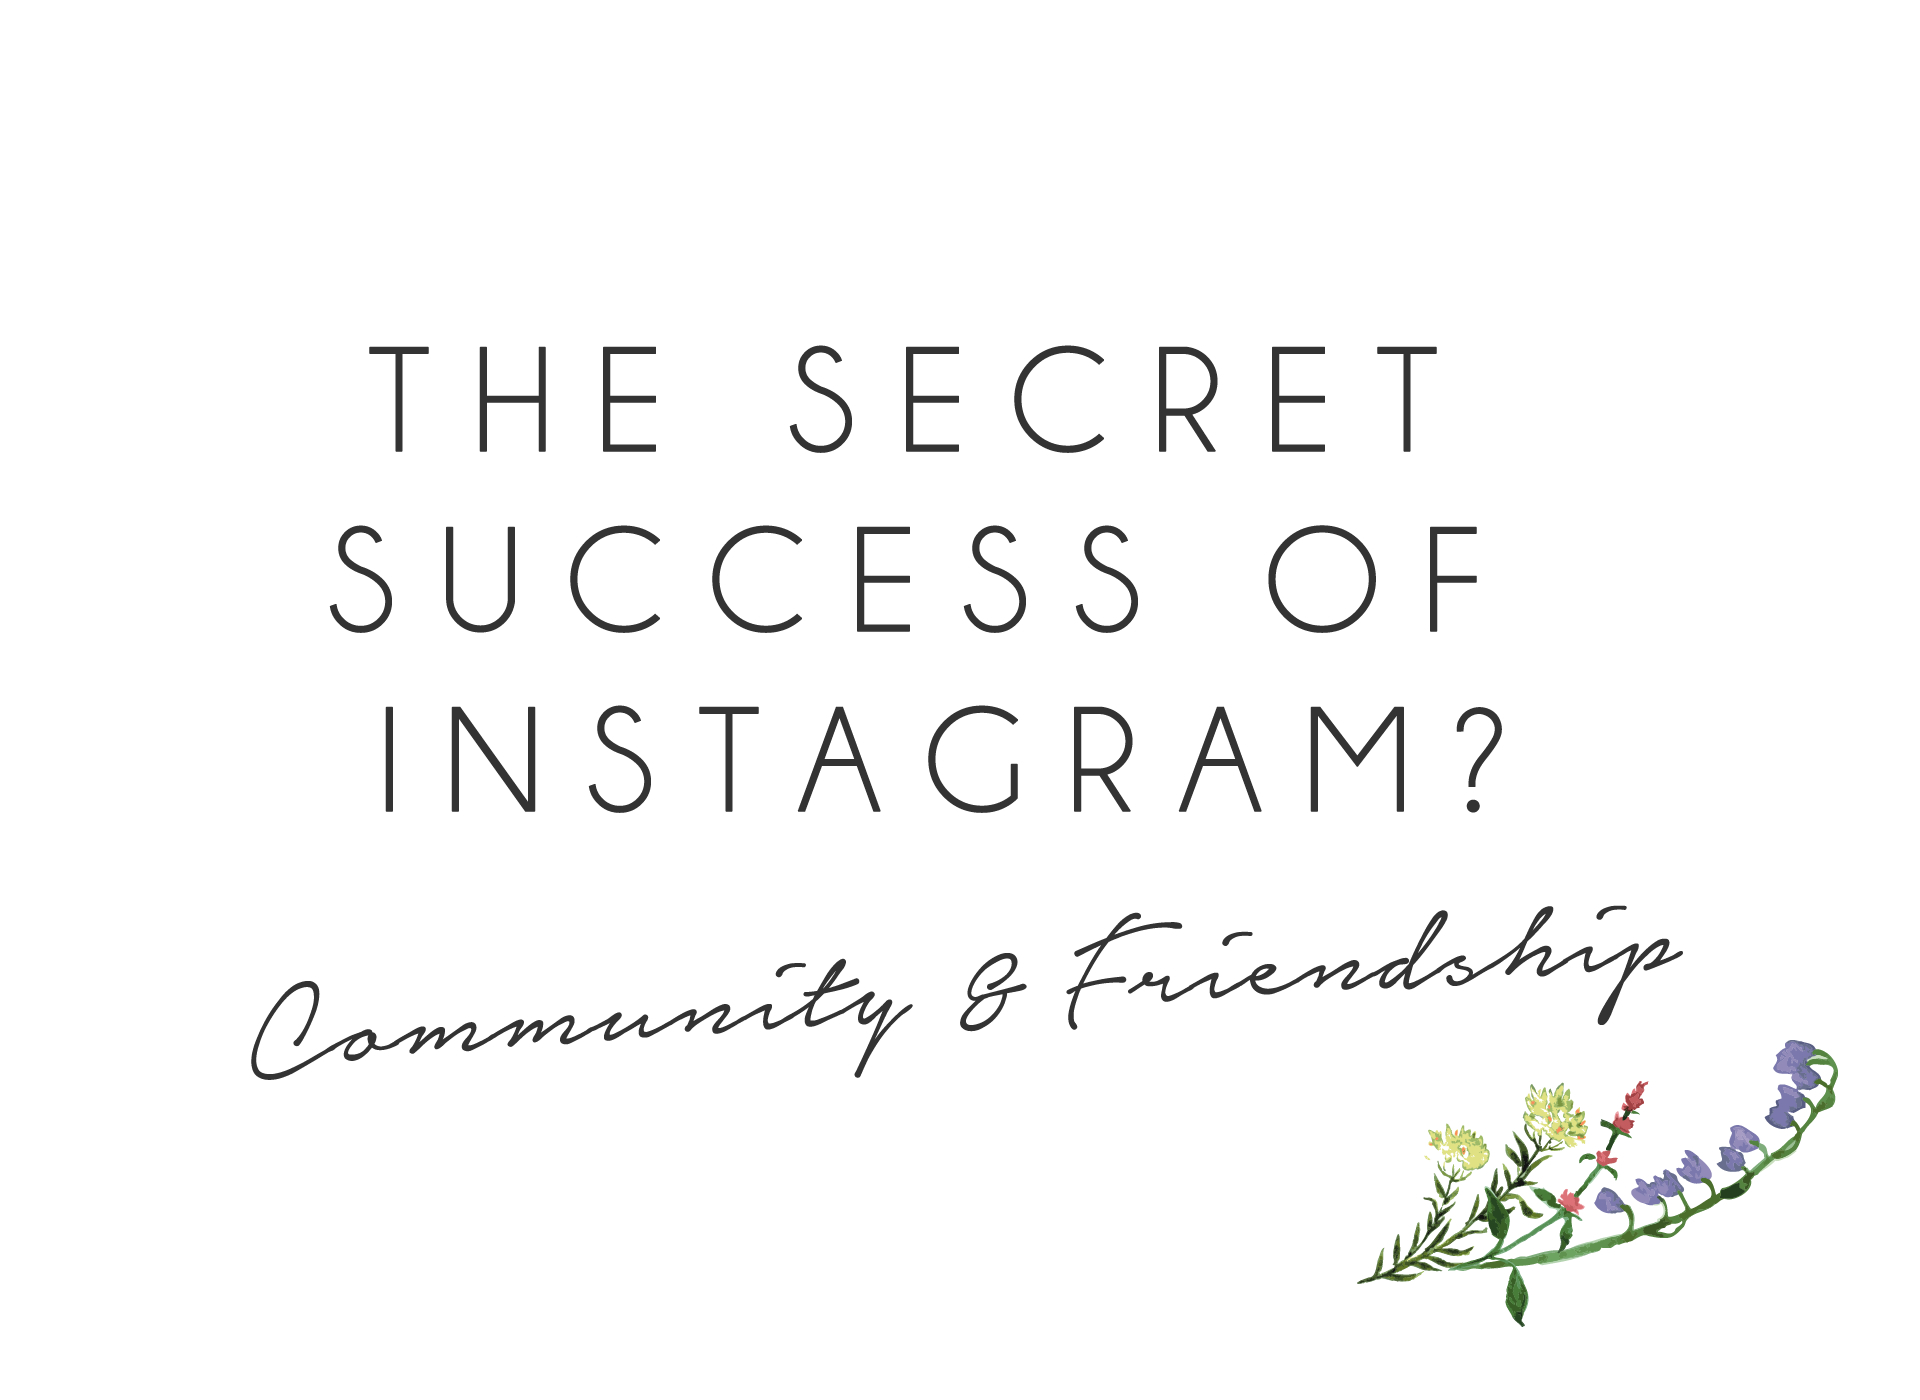 The secret success of Instagram? Community and friendship.